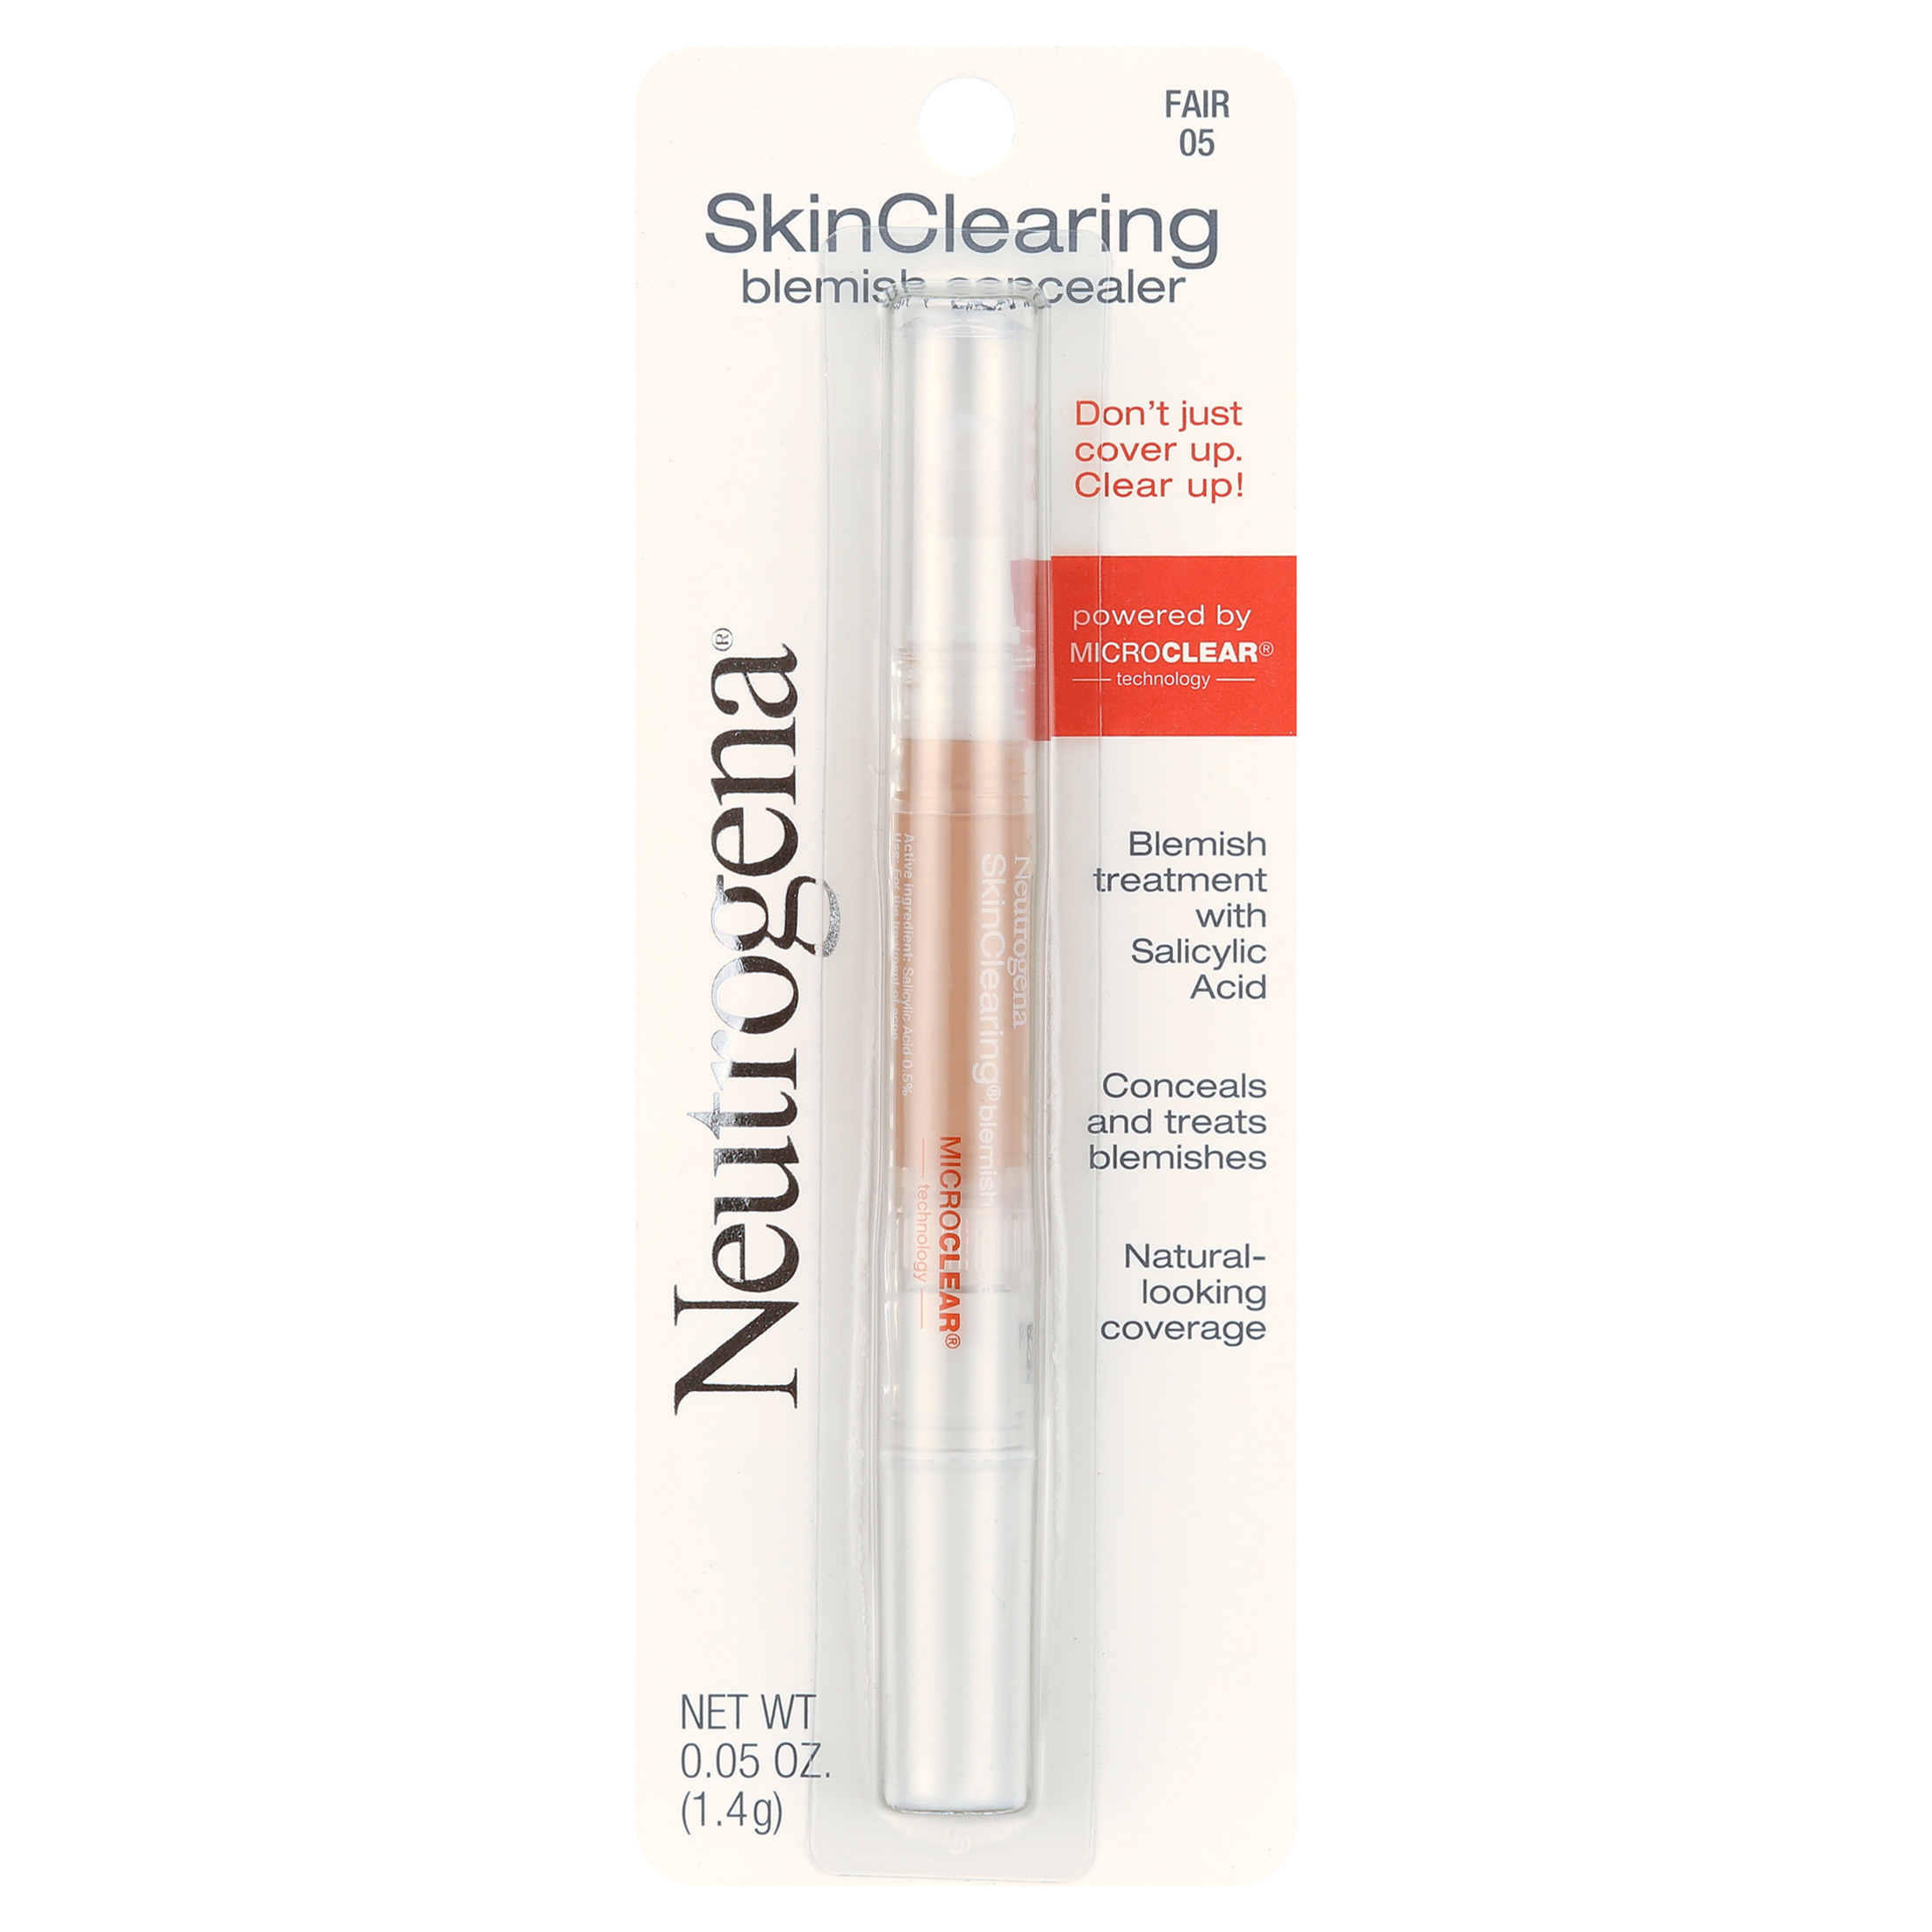 Neutrogena SkinClearing Blemish Concealer Makeup, Fair 05,.05 oz - image 3 of 11